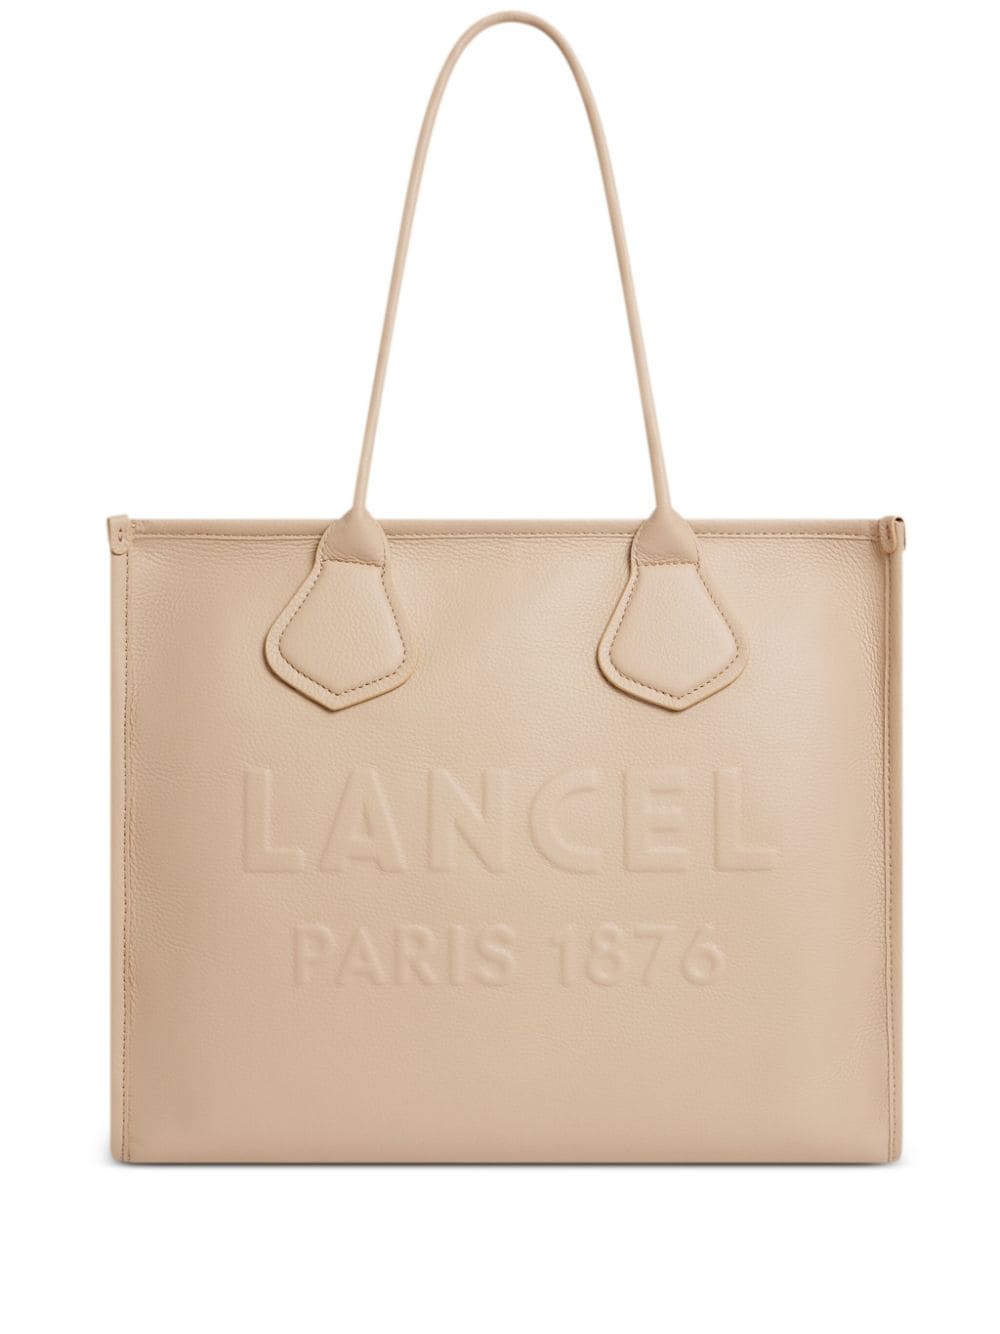 Lancel Große Jour de Lancel Handtasche - Nude von Lancel